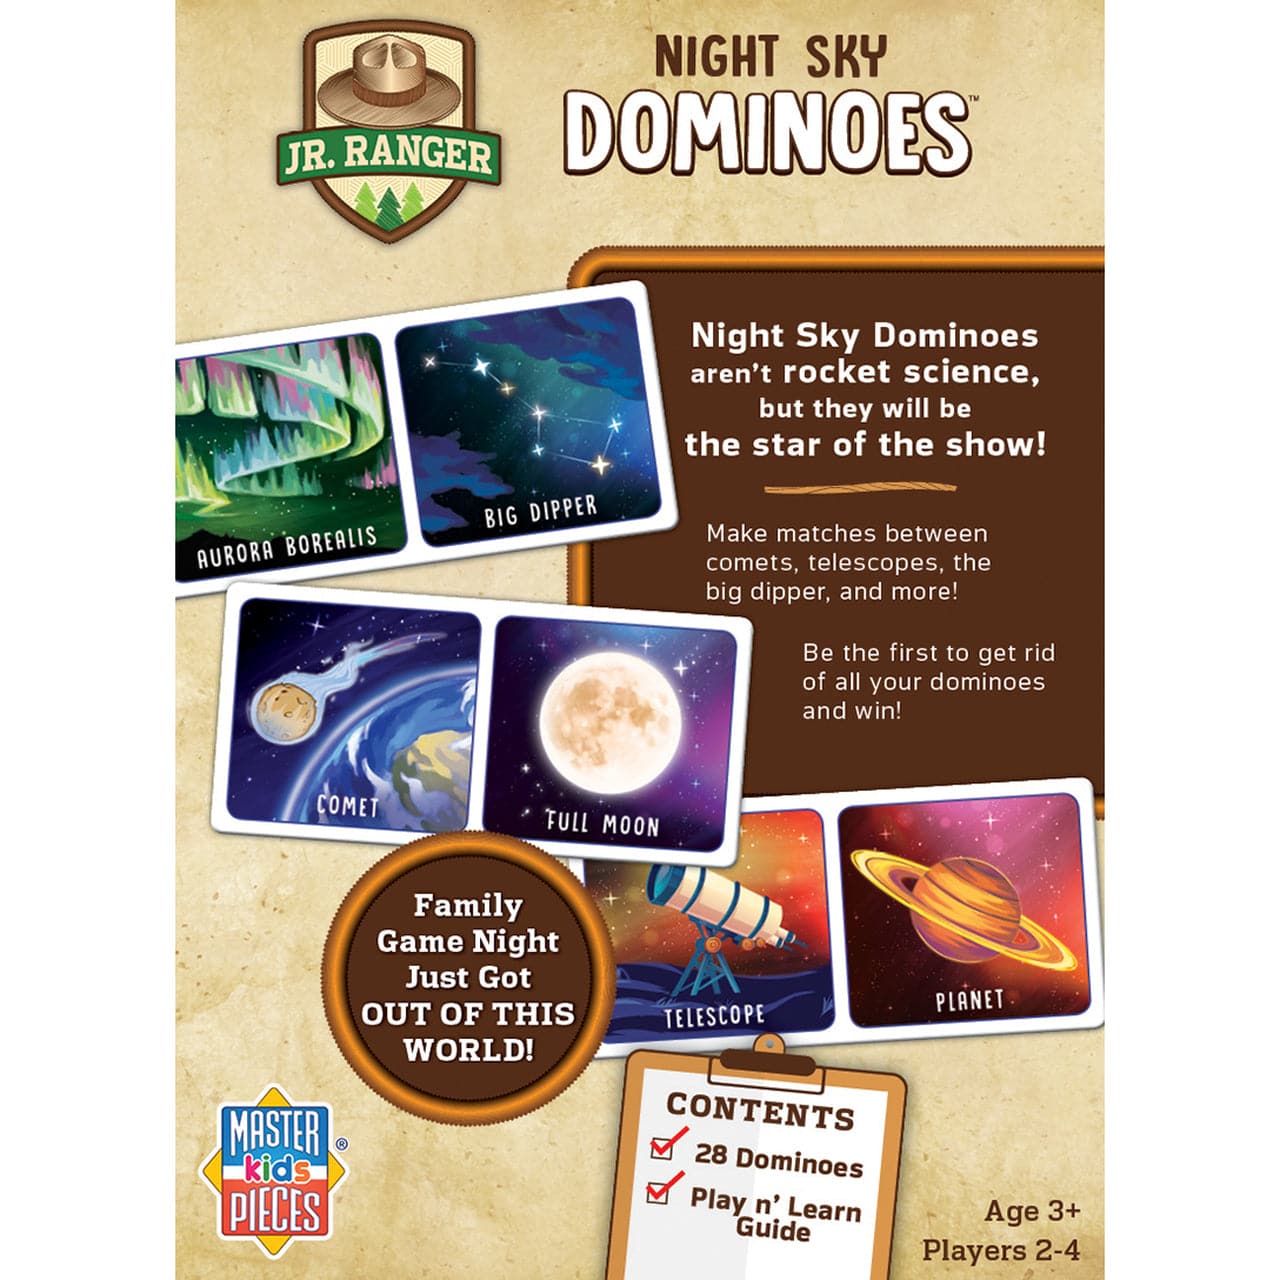 MasterPieces-Jr Ranger - Night Sky Dominoes-41977-Legacy Toys